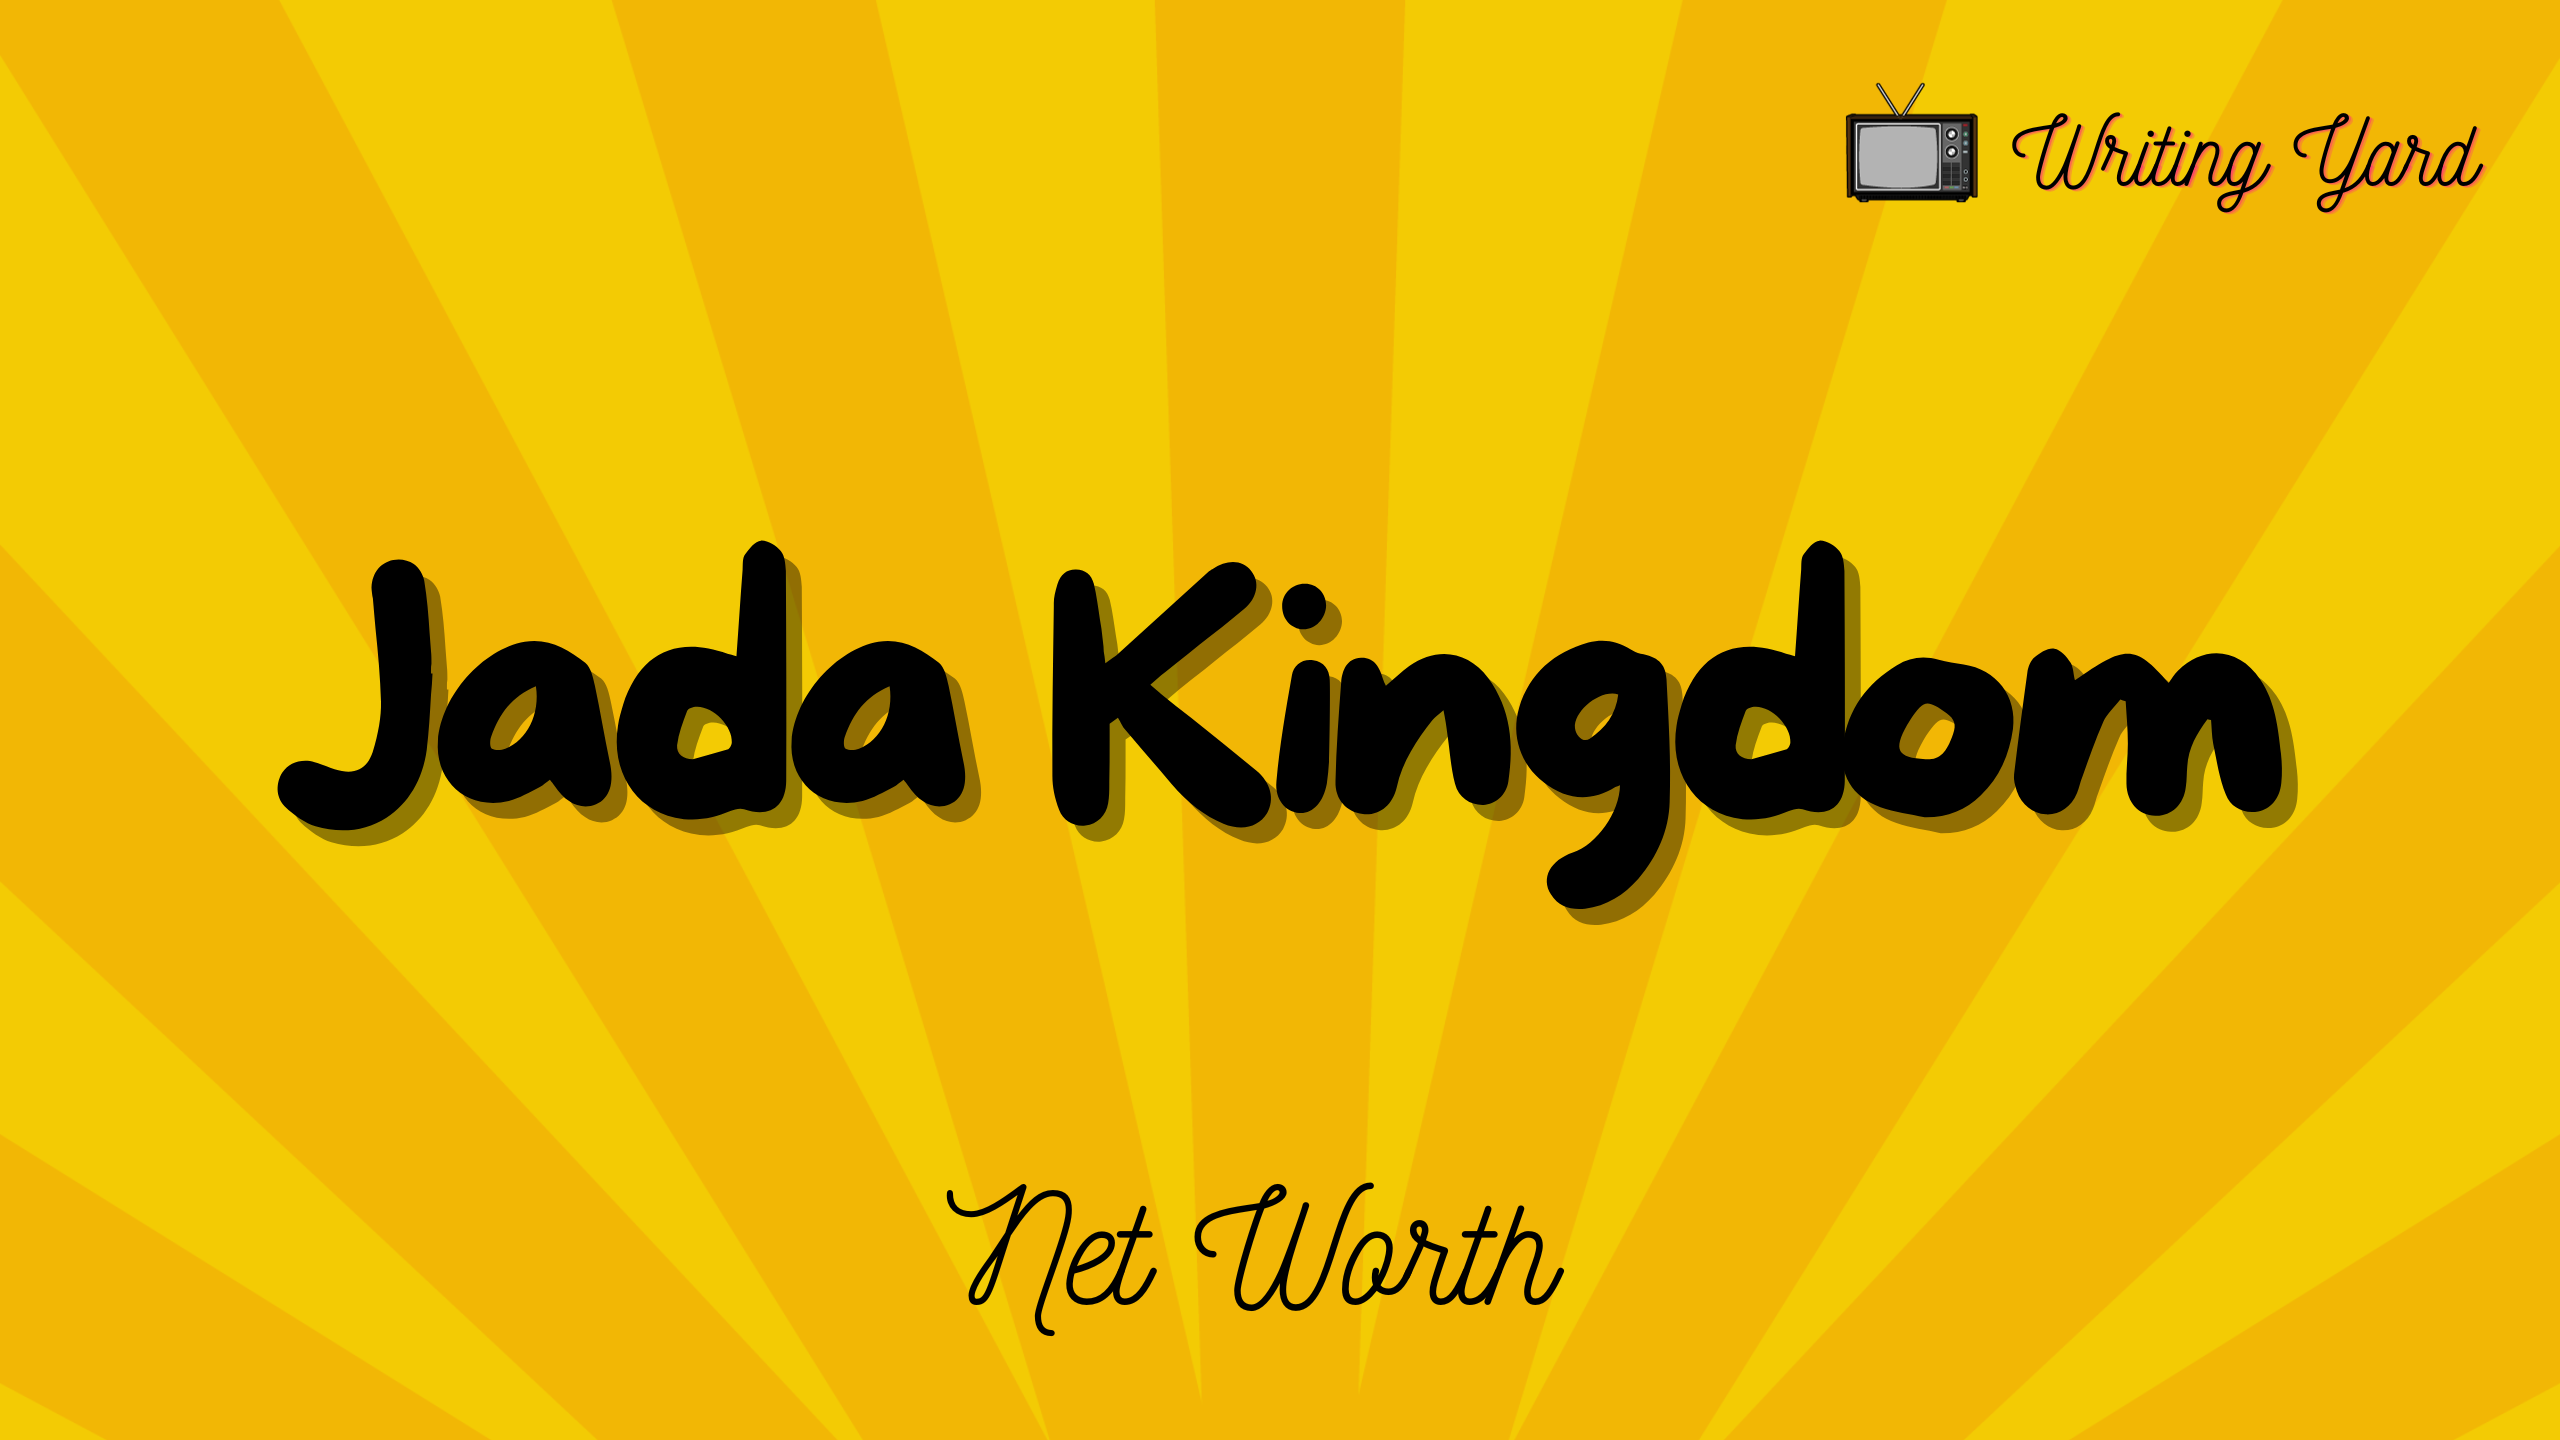 Jada Kingdom Net Worth